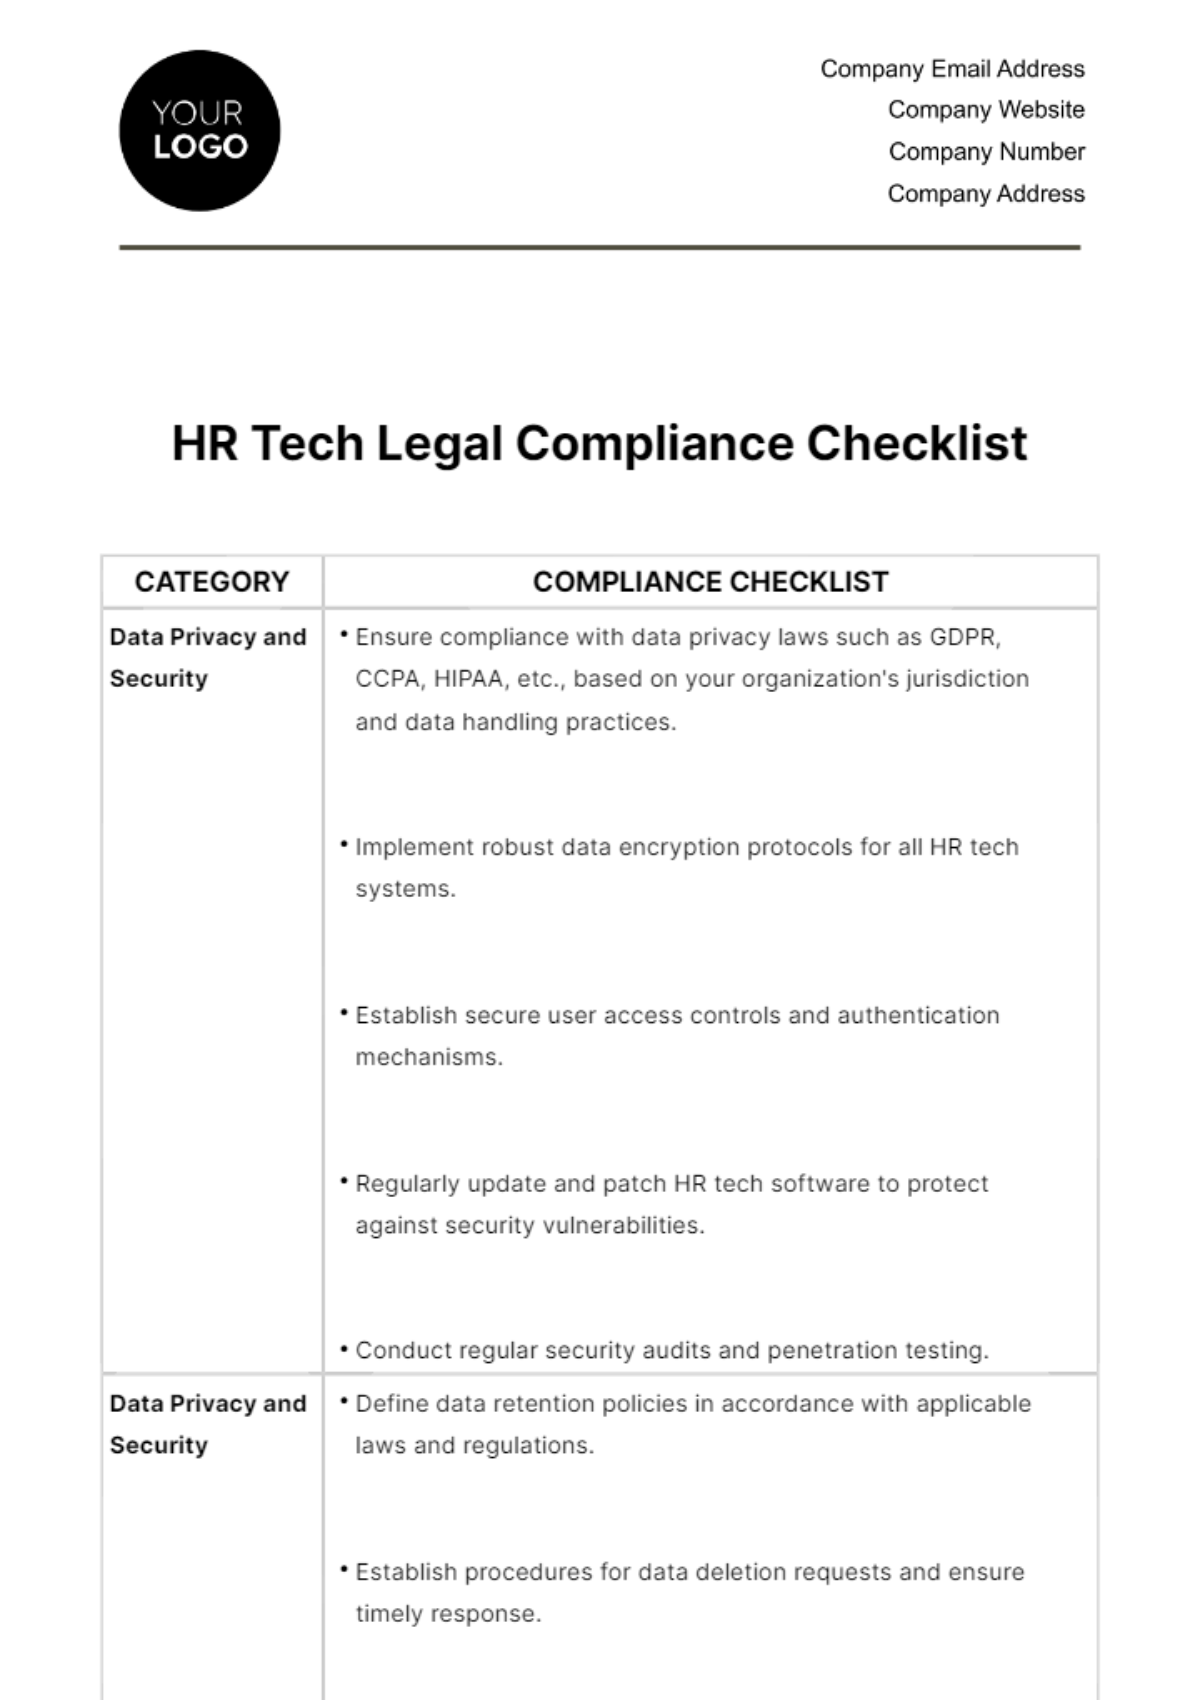 HR Tech Legal Compliance Checklist Template